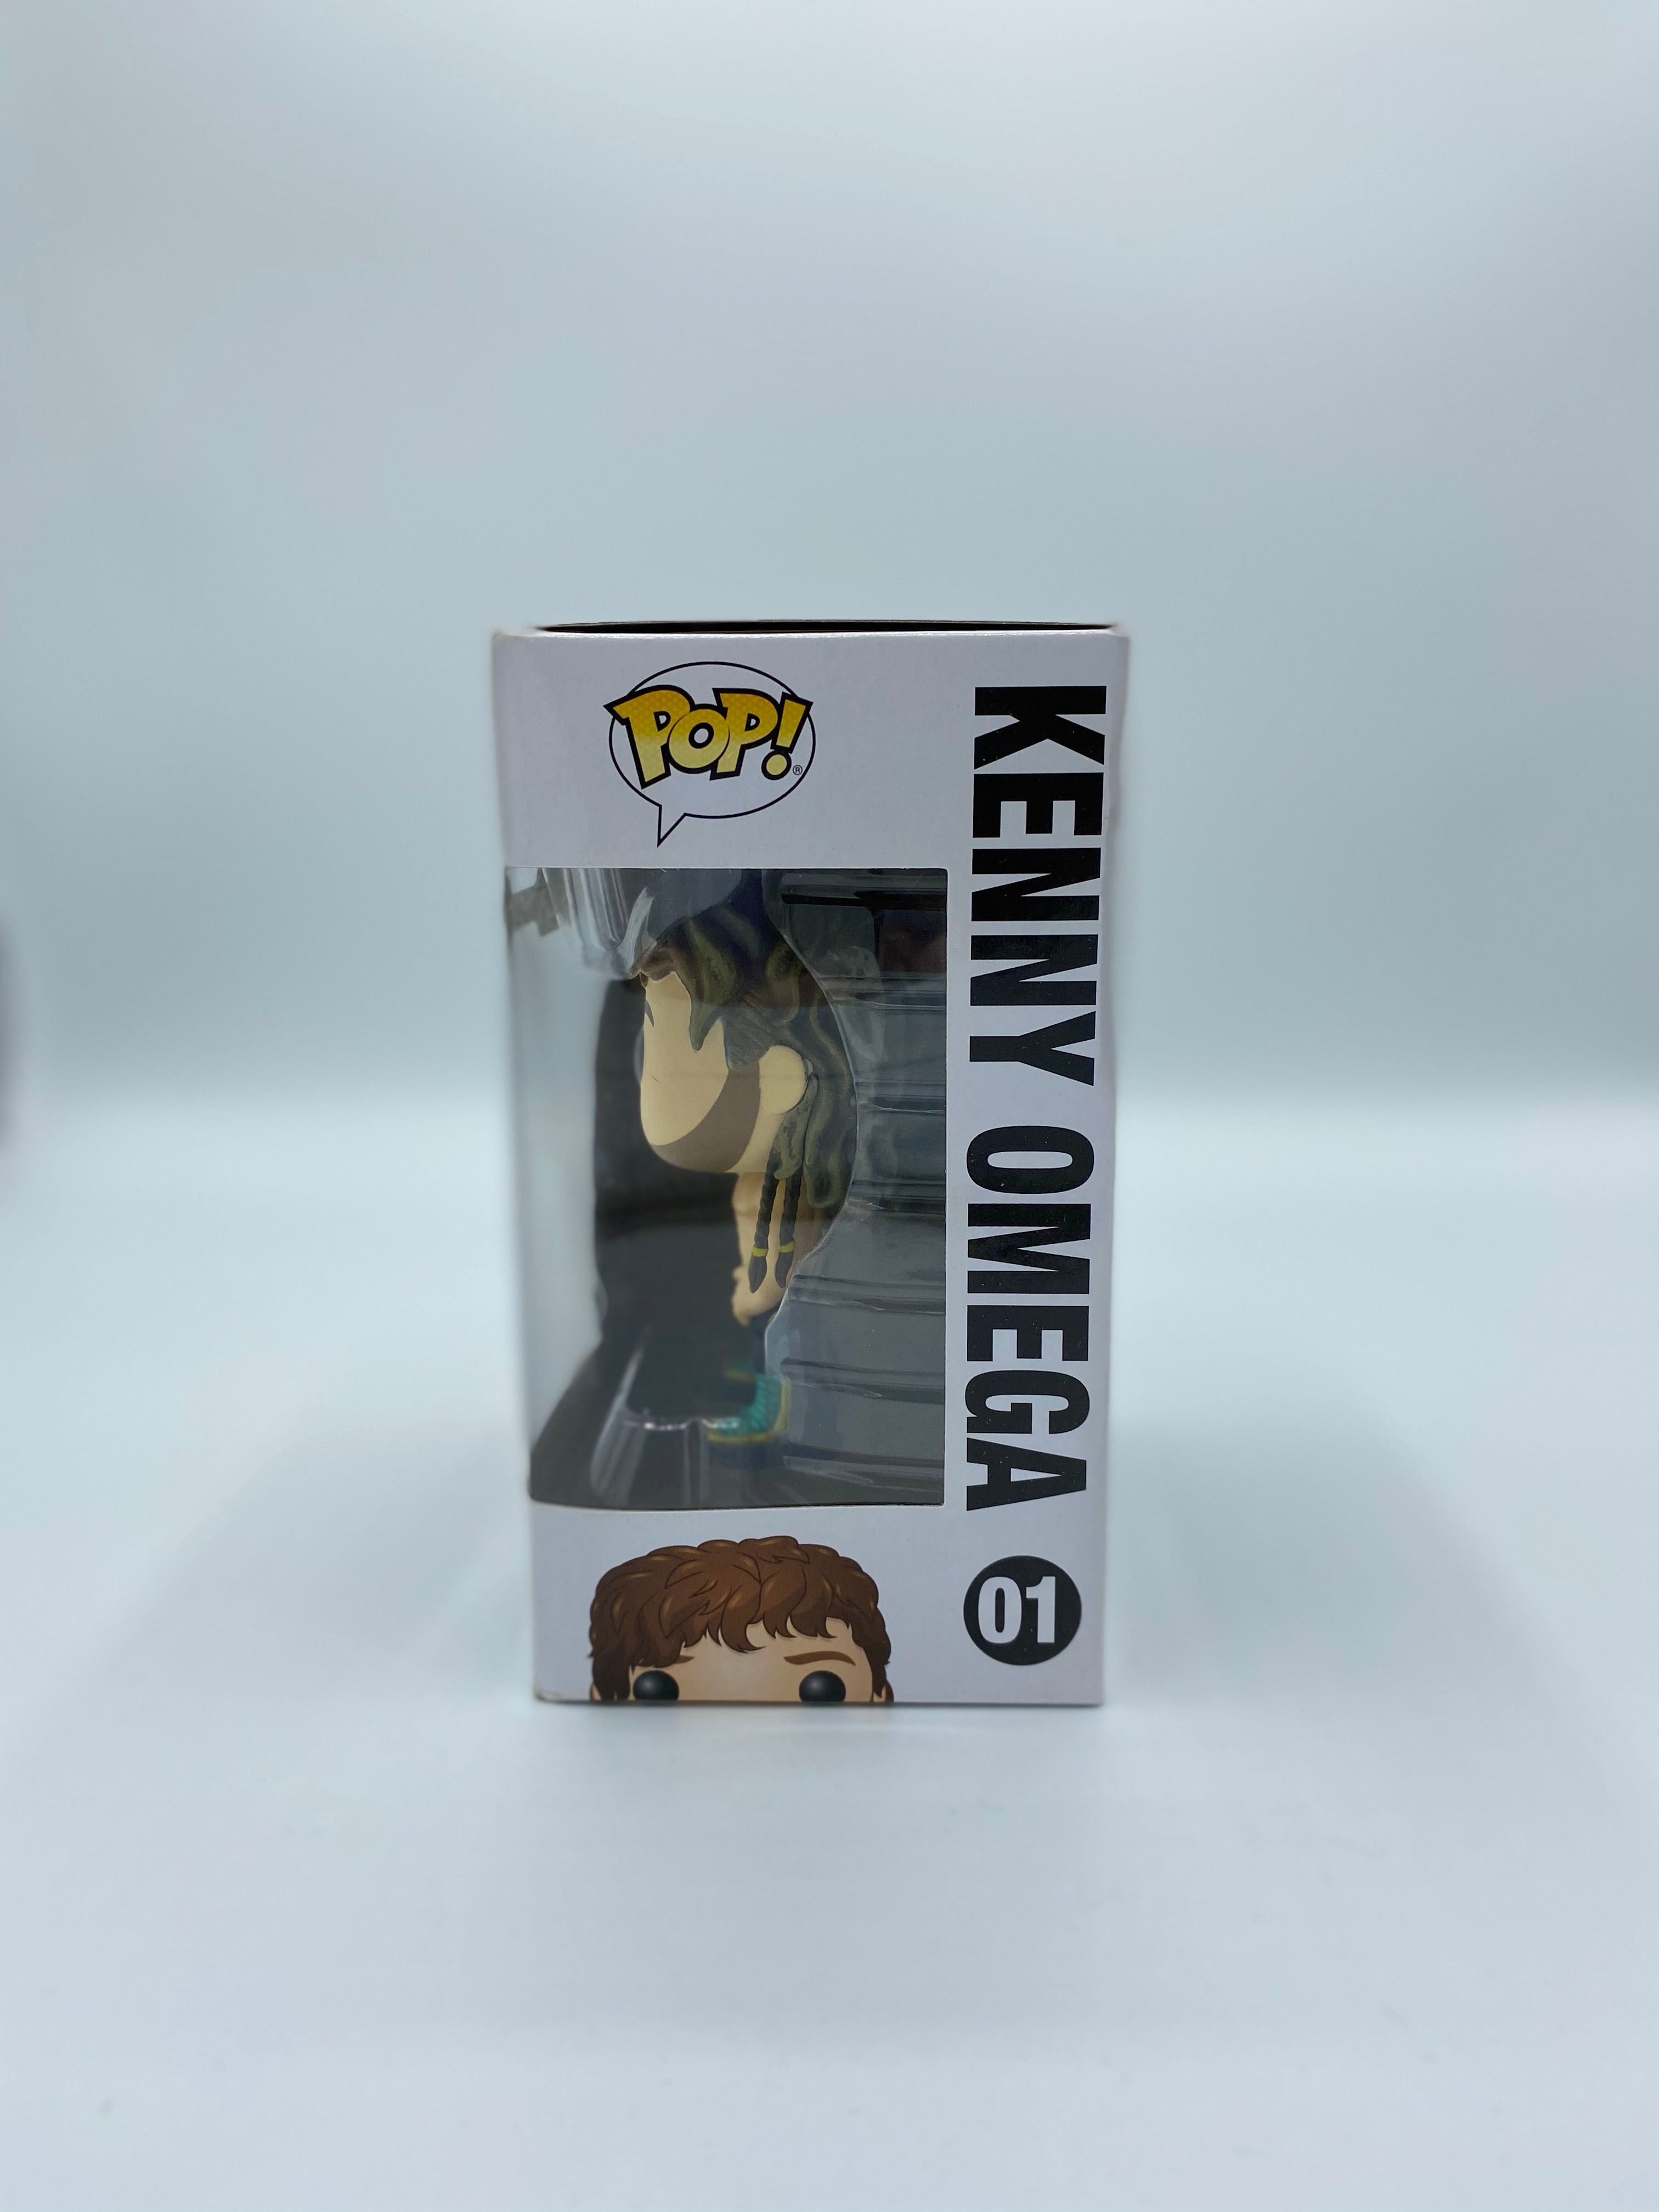 Kenny Omega POP! Figurine